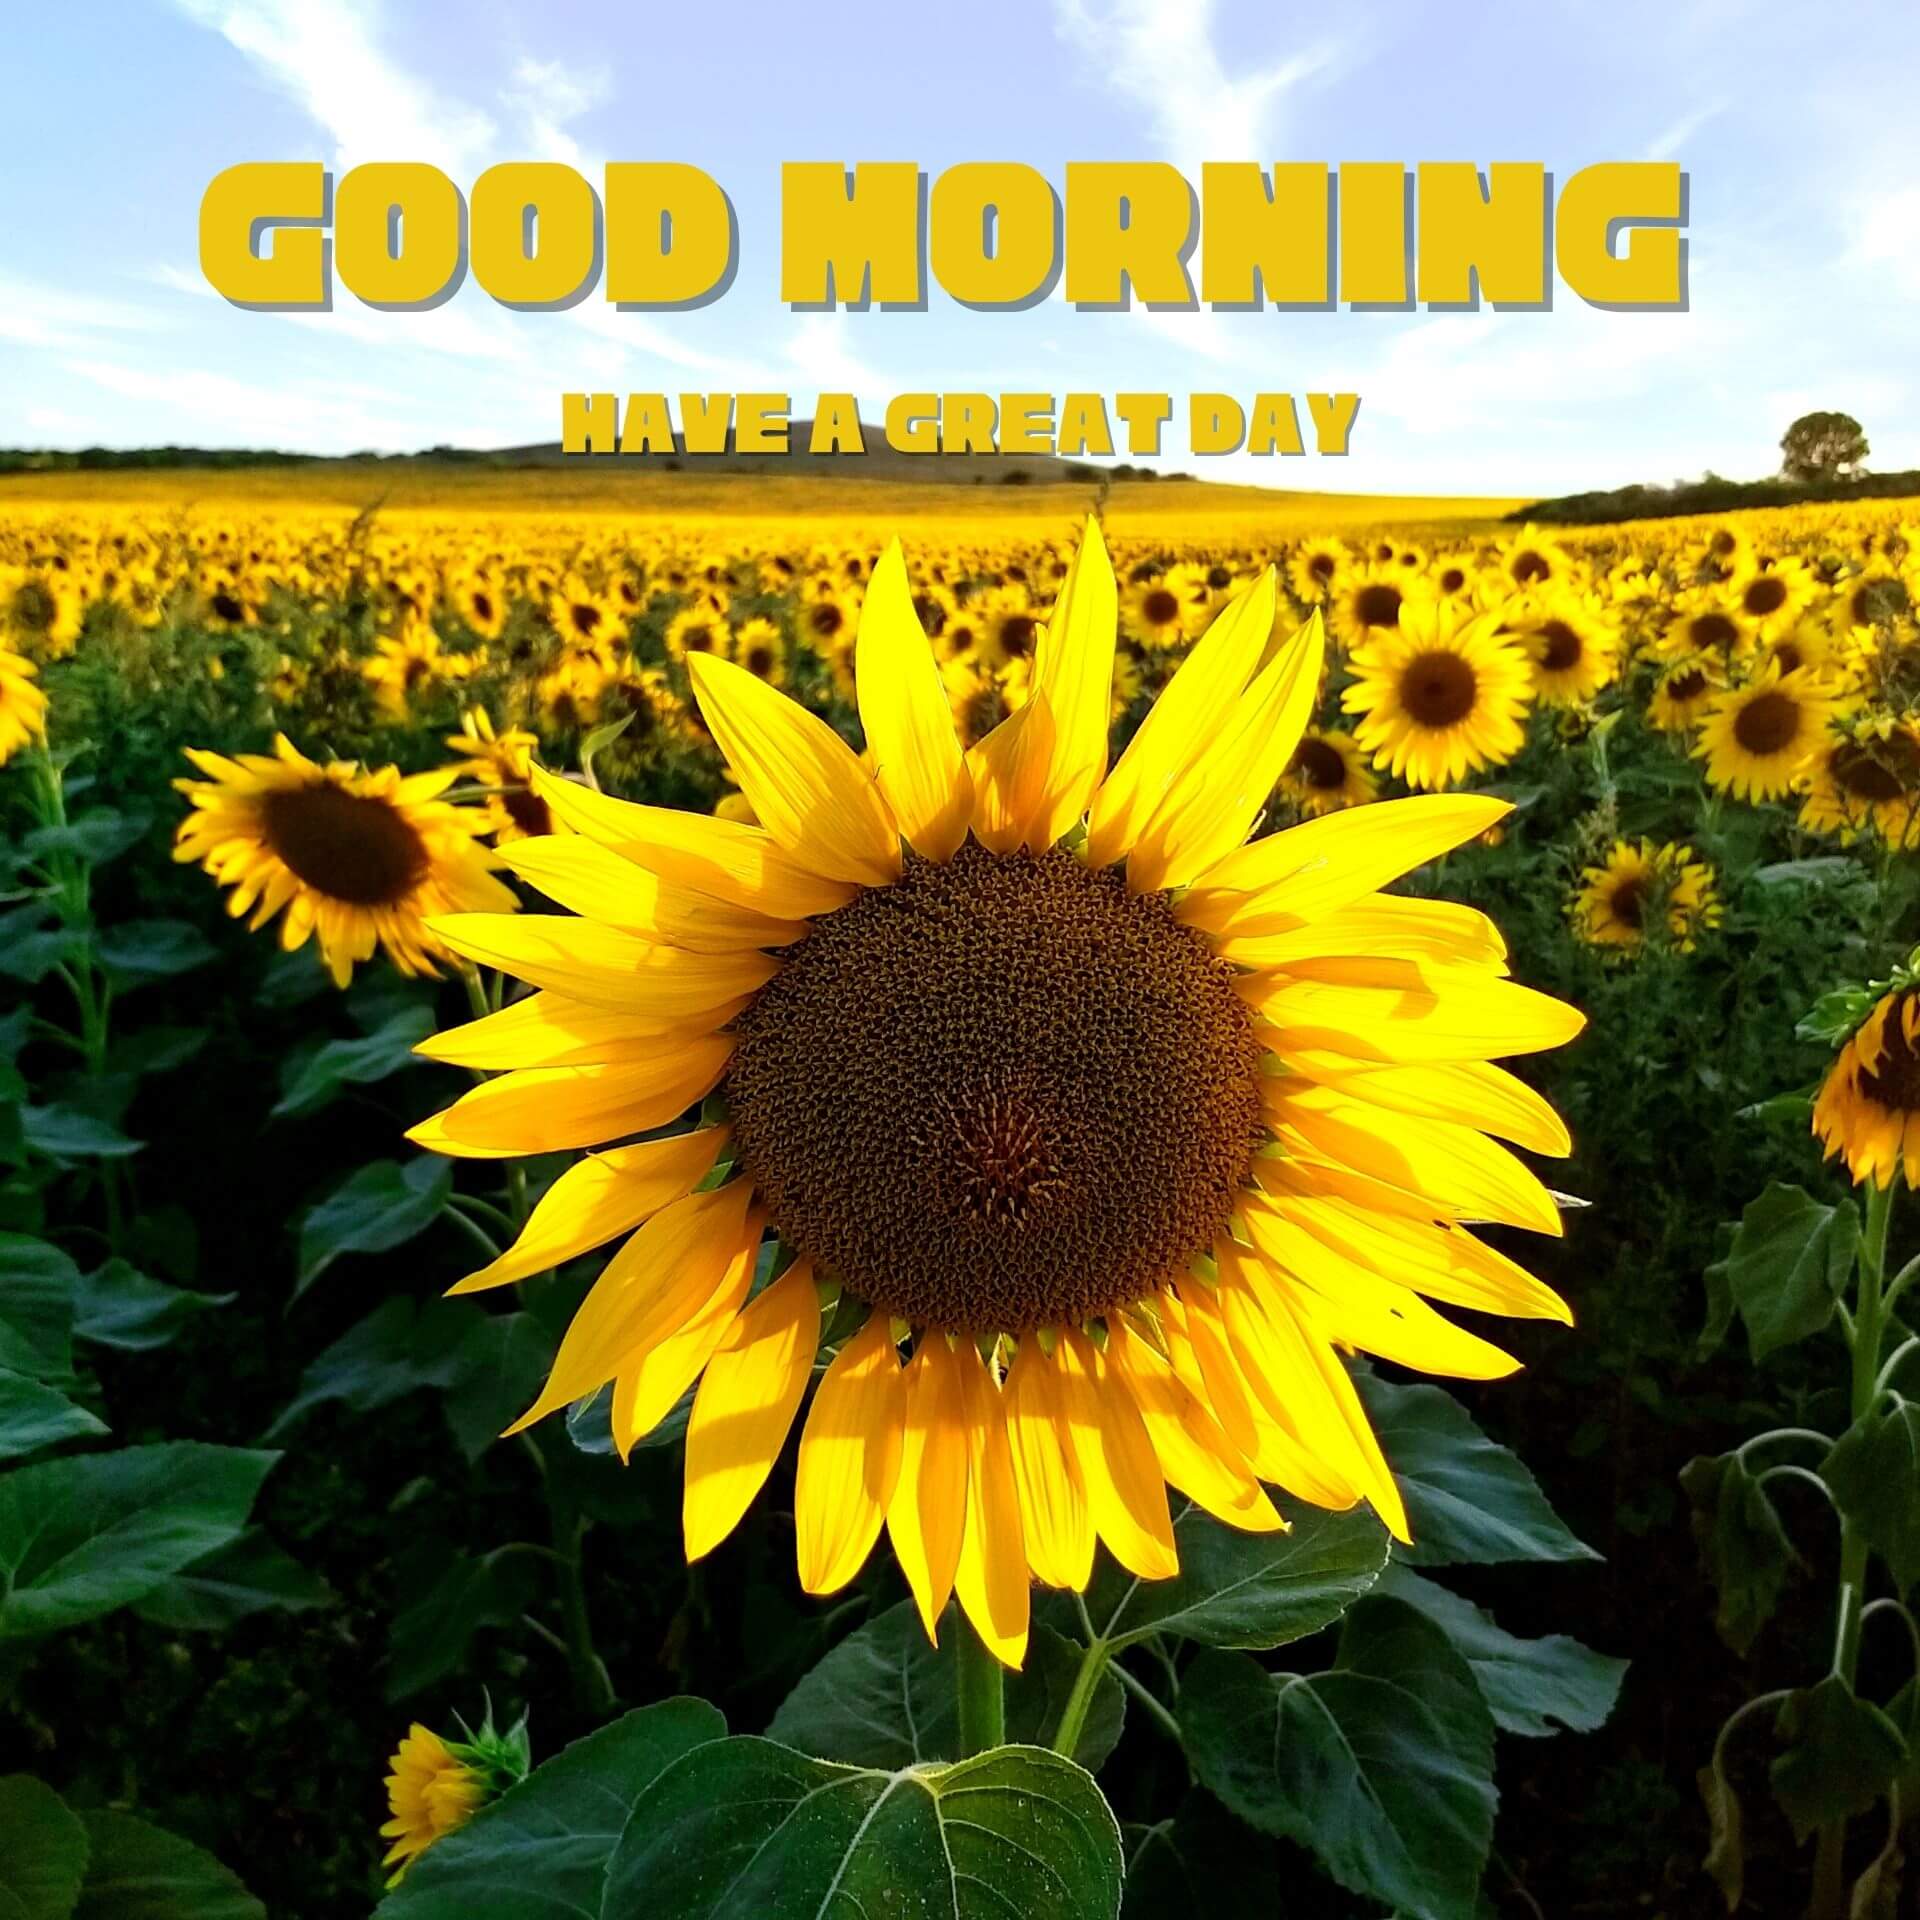 4k Ultra HD Good Morning Wallpaper With Sunflower